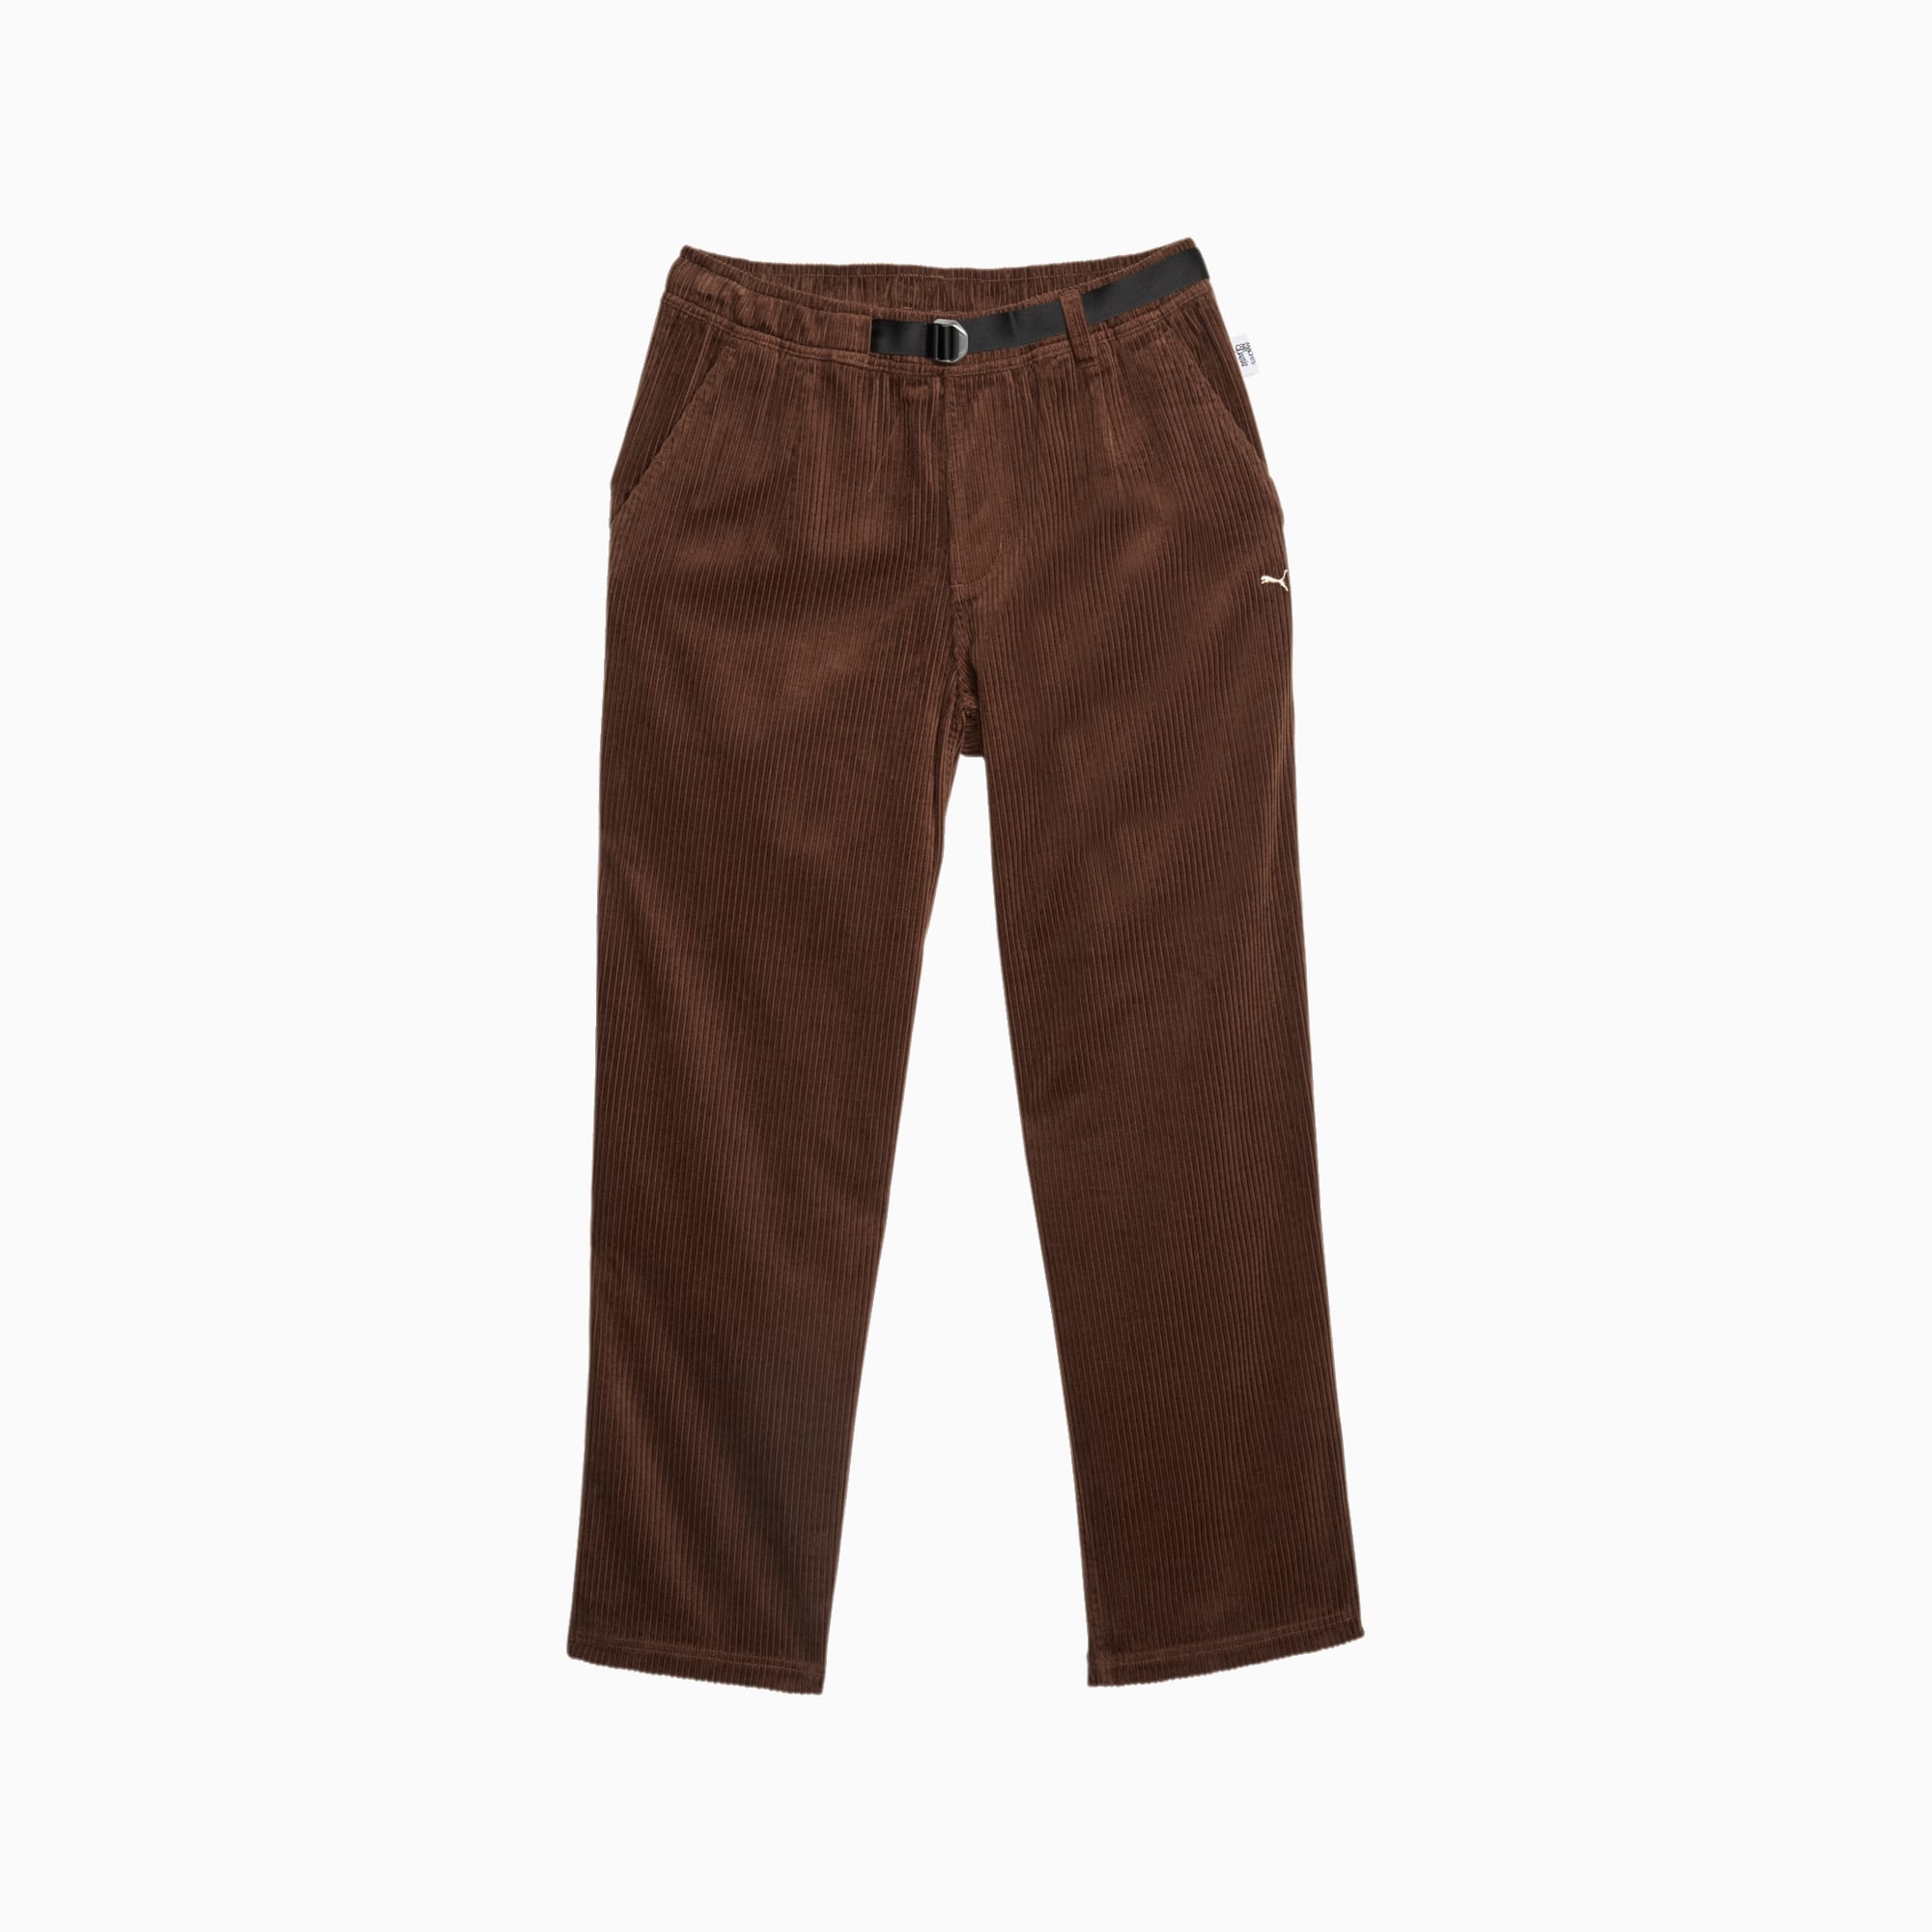 Men's PUMA Mmq Corduroy Pants, Chestnut Brown